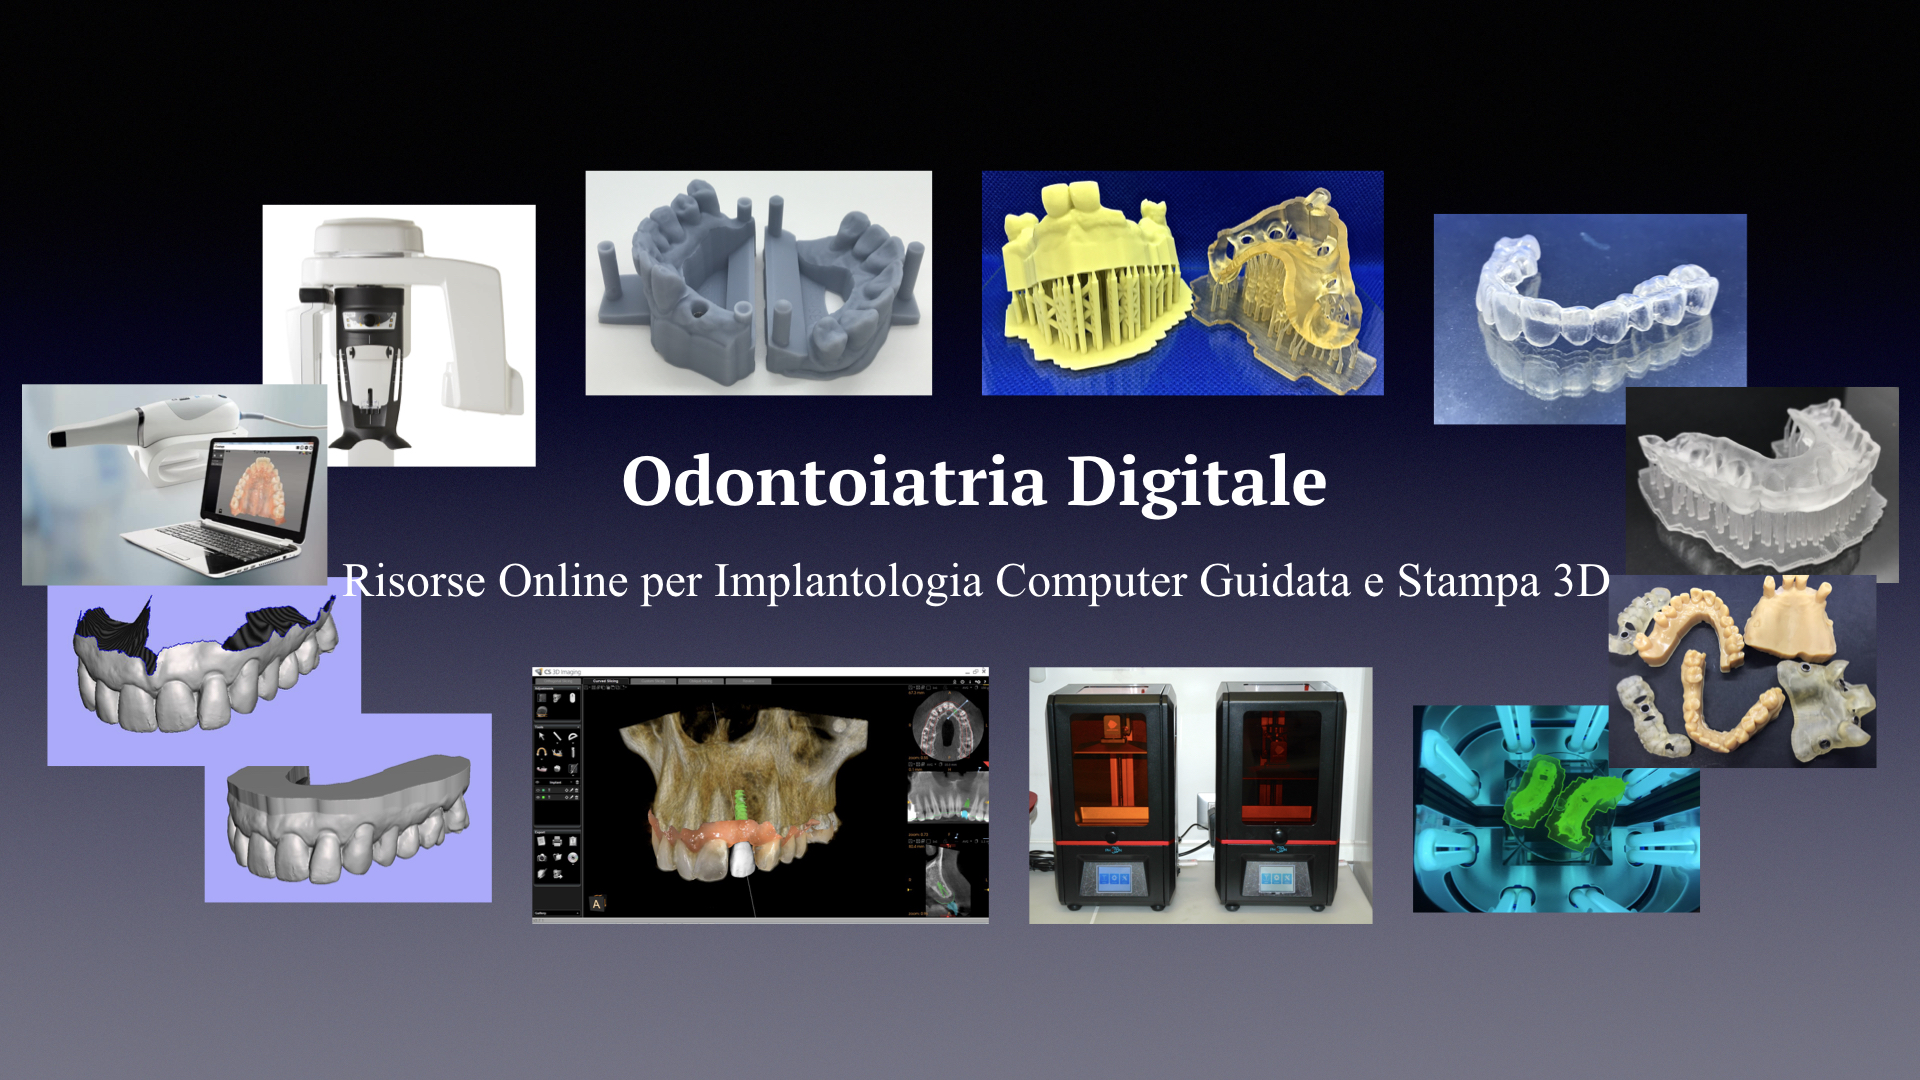 Odontoiatria Digitale strumenti implantologia computer guidata stampa 3D